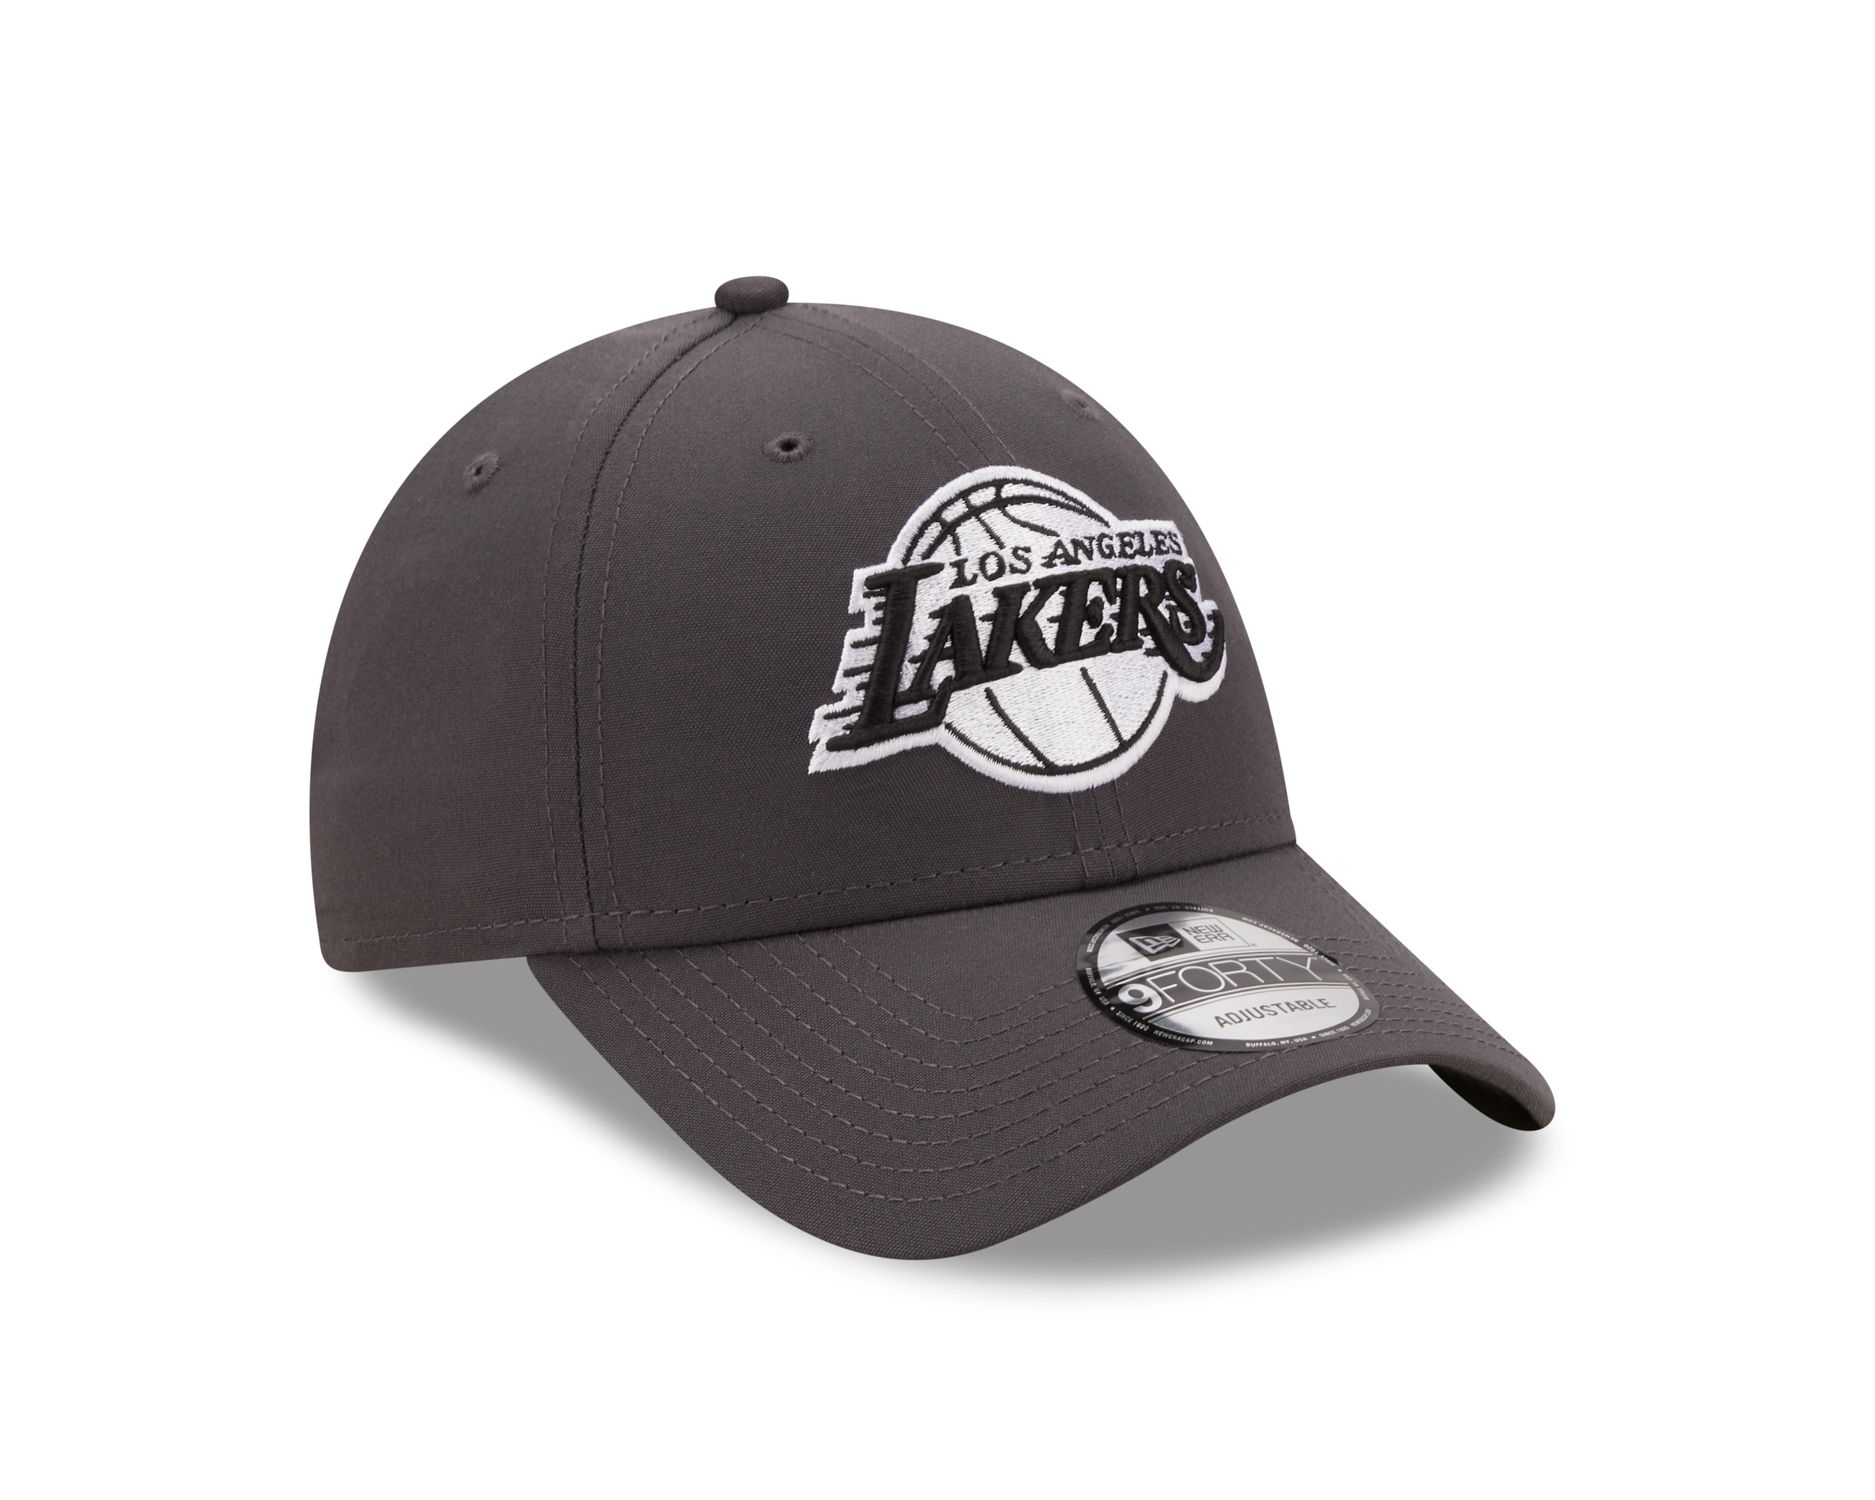 New Era Los Angeles Lakers 9Forty Monochrome Cap